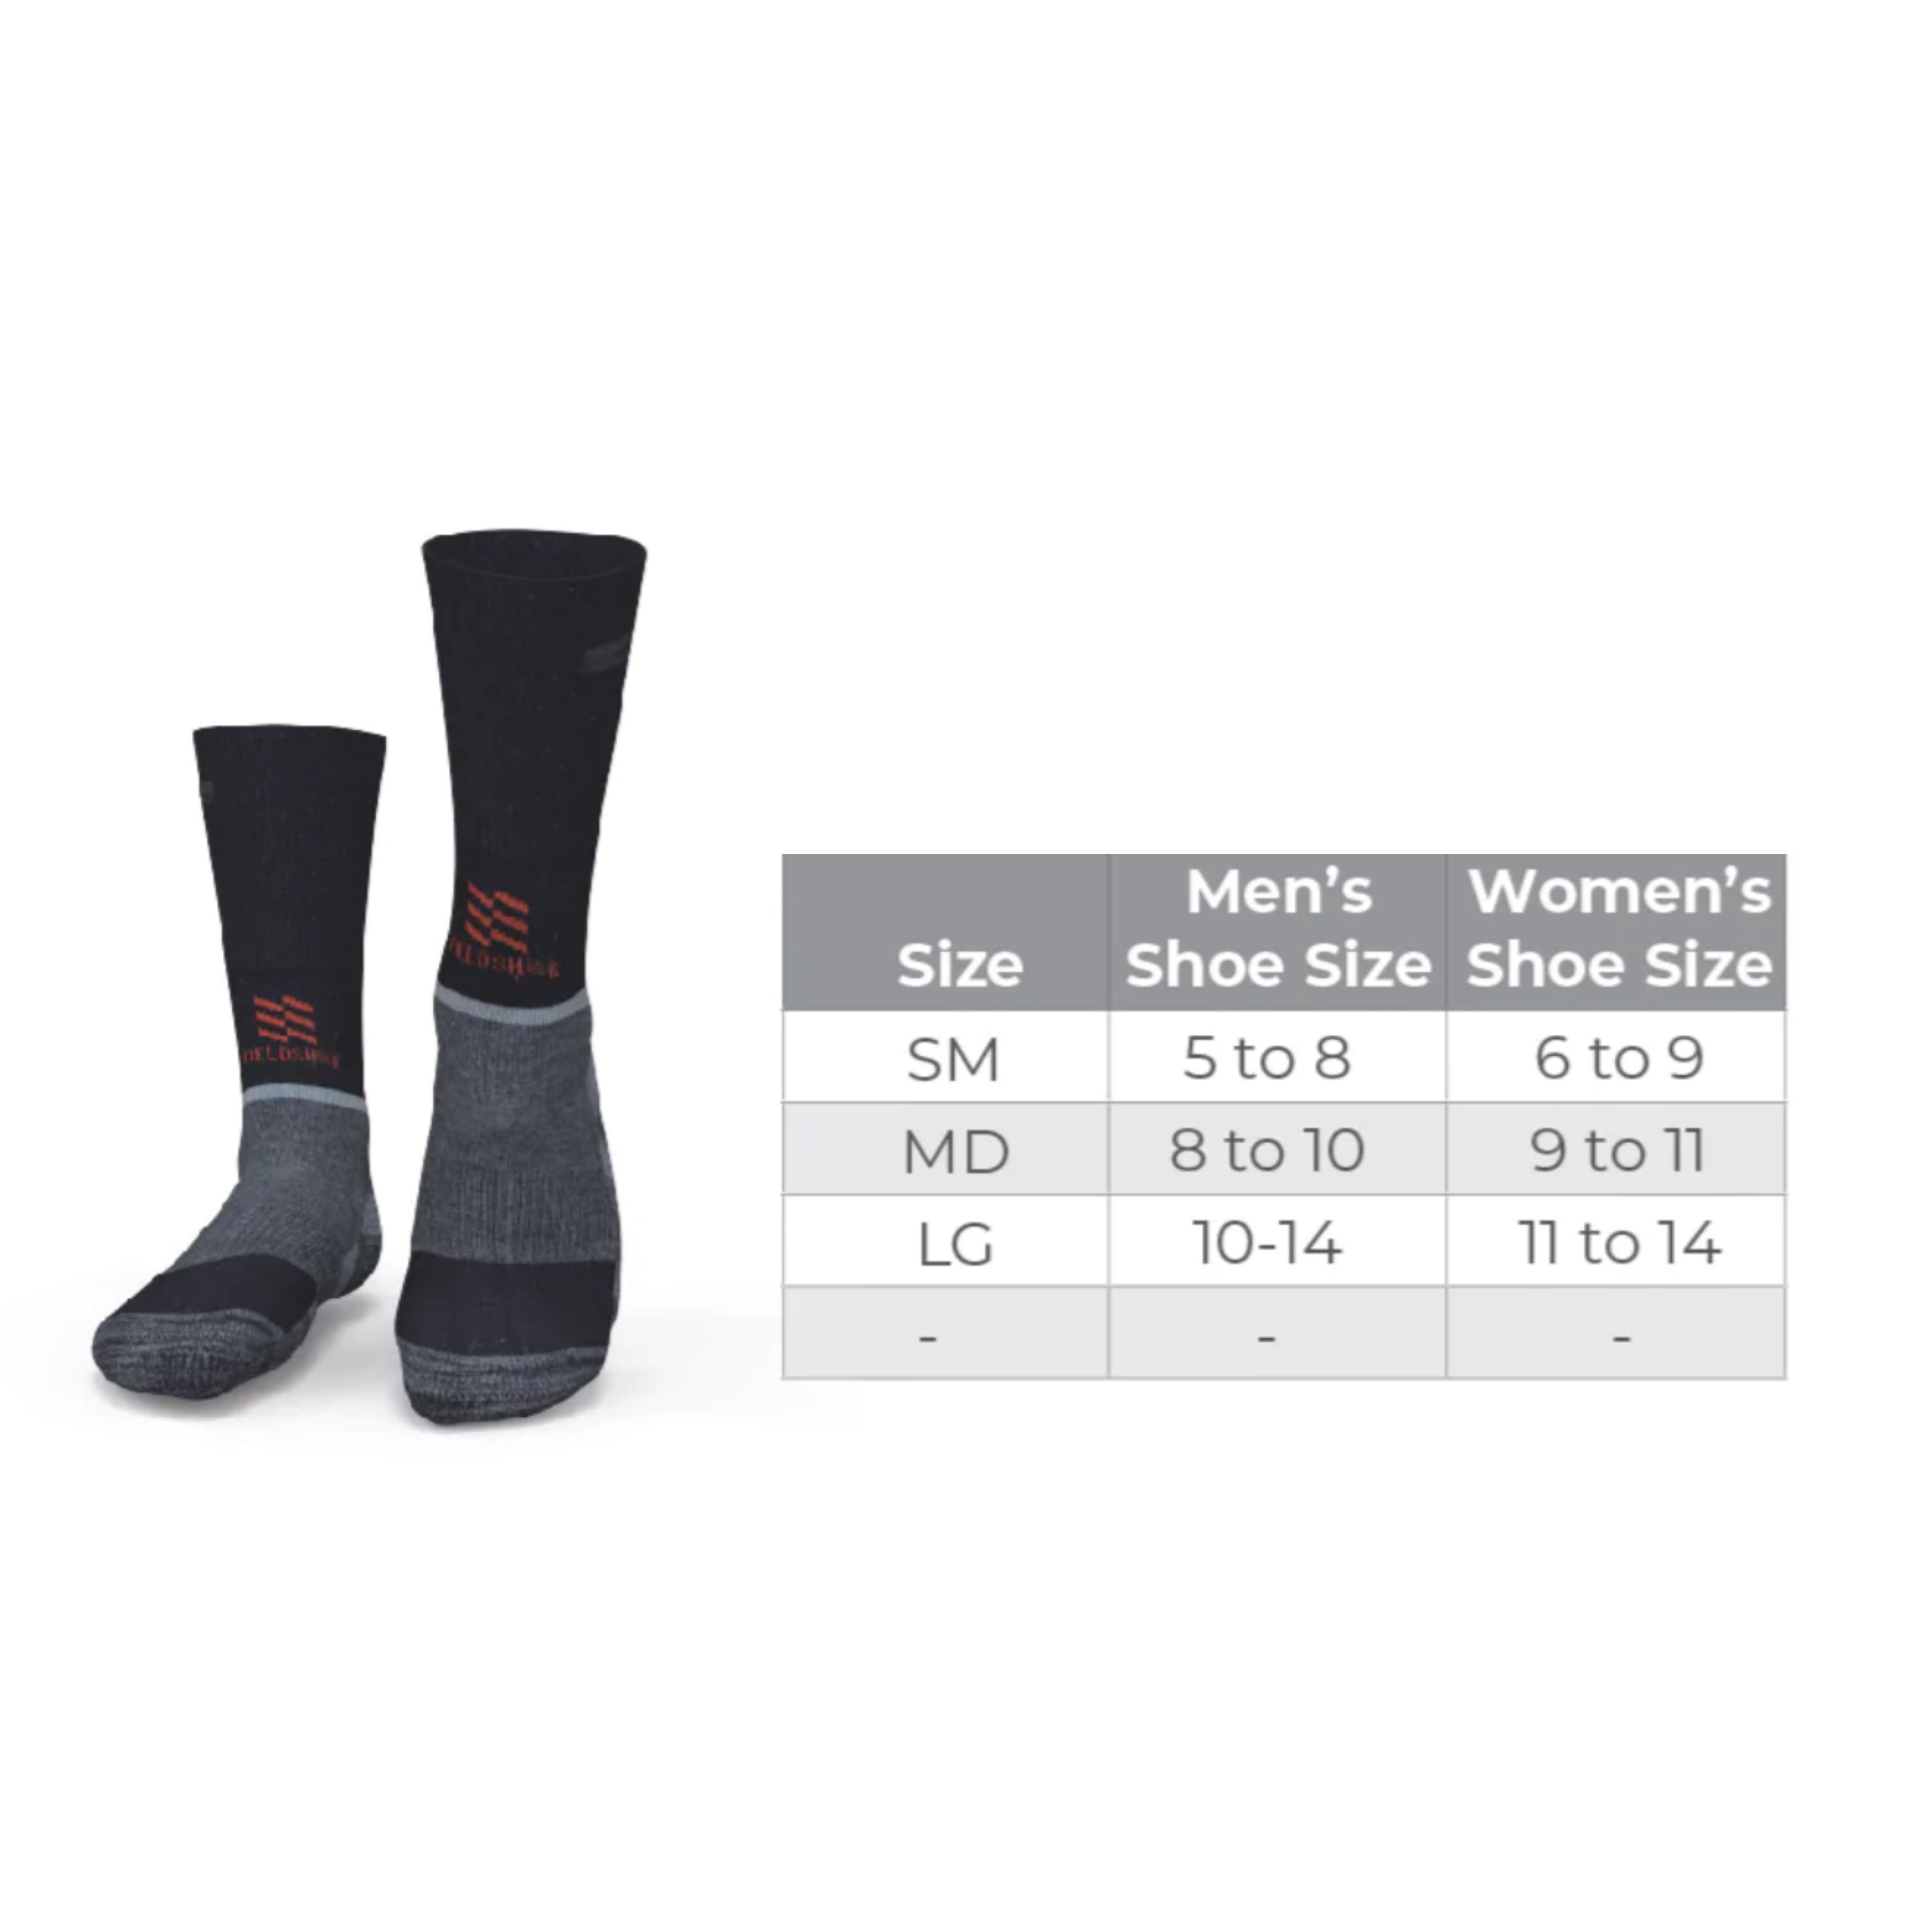 Chaussettes chauffantes mérinos Premium 2,0 - Femme||Premium 2.0 Merino  heated socks - Women's